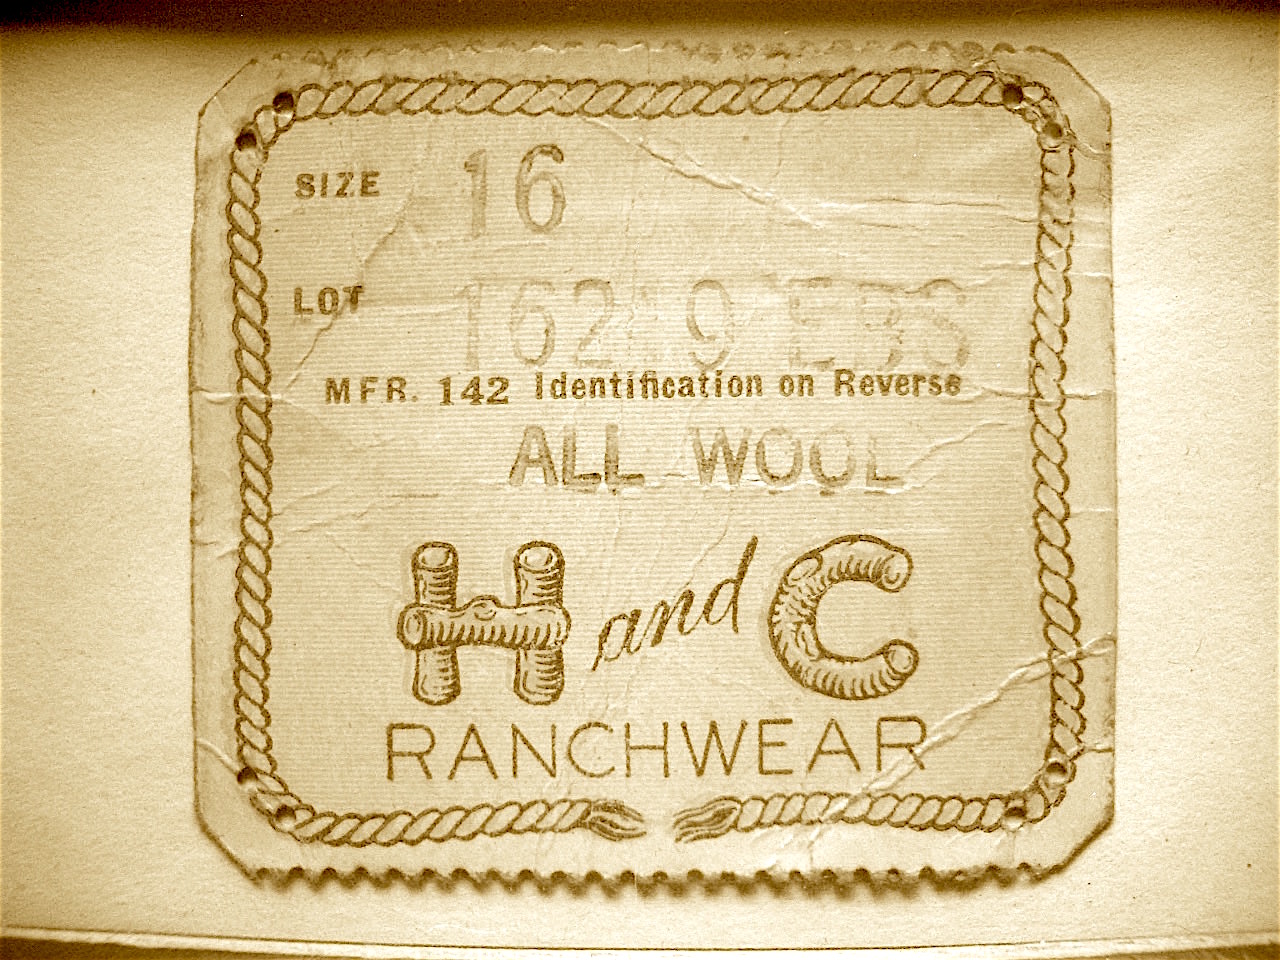 H-Bar-C - Original H and C Ranchwear Label